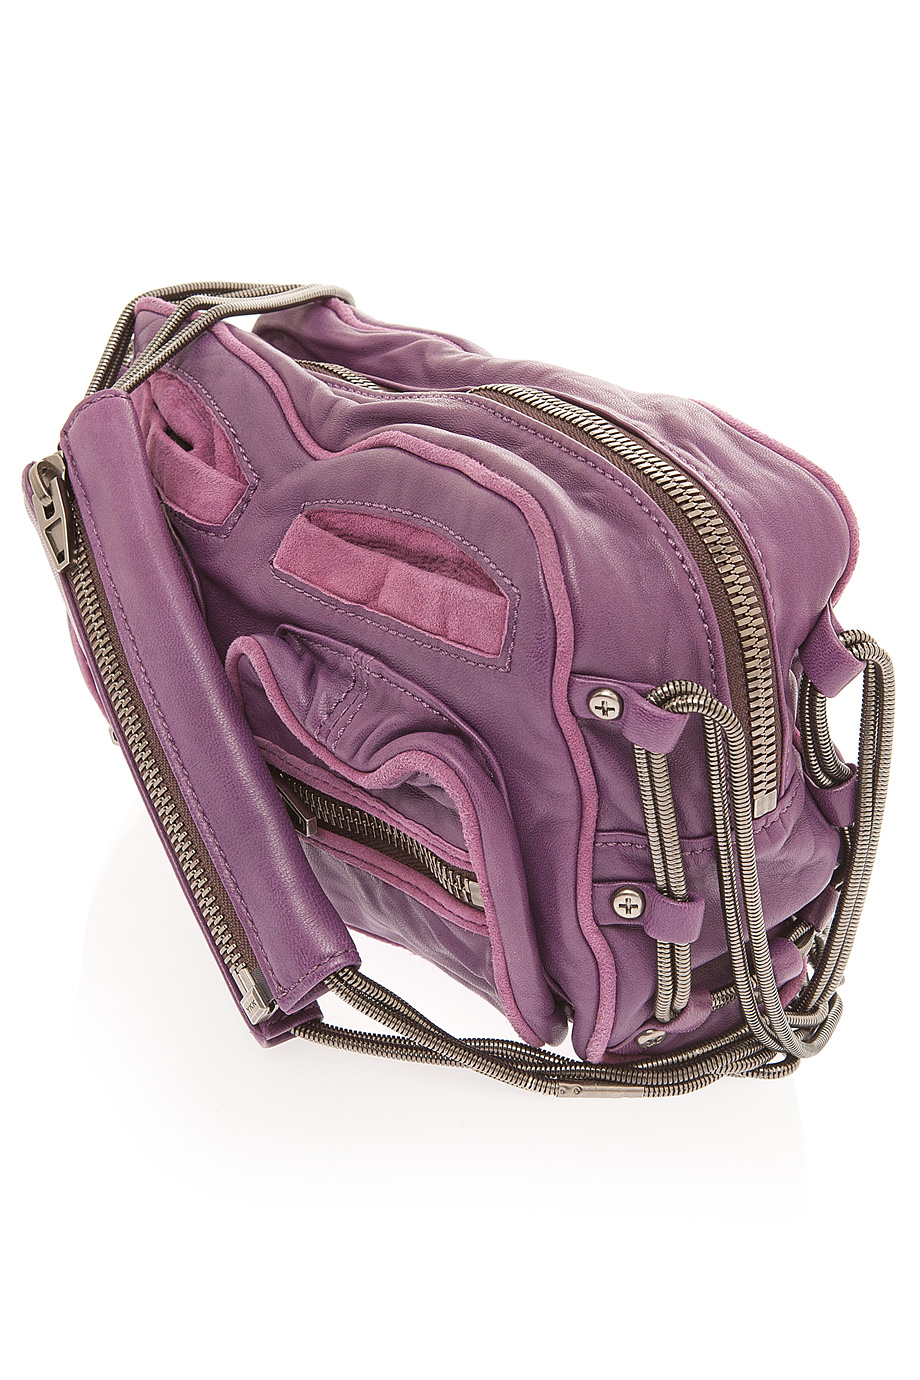 Lyst - Alexander Wang Brenda Lambskin Shoulder Bag in Purple